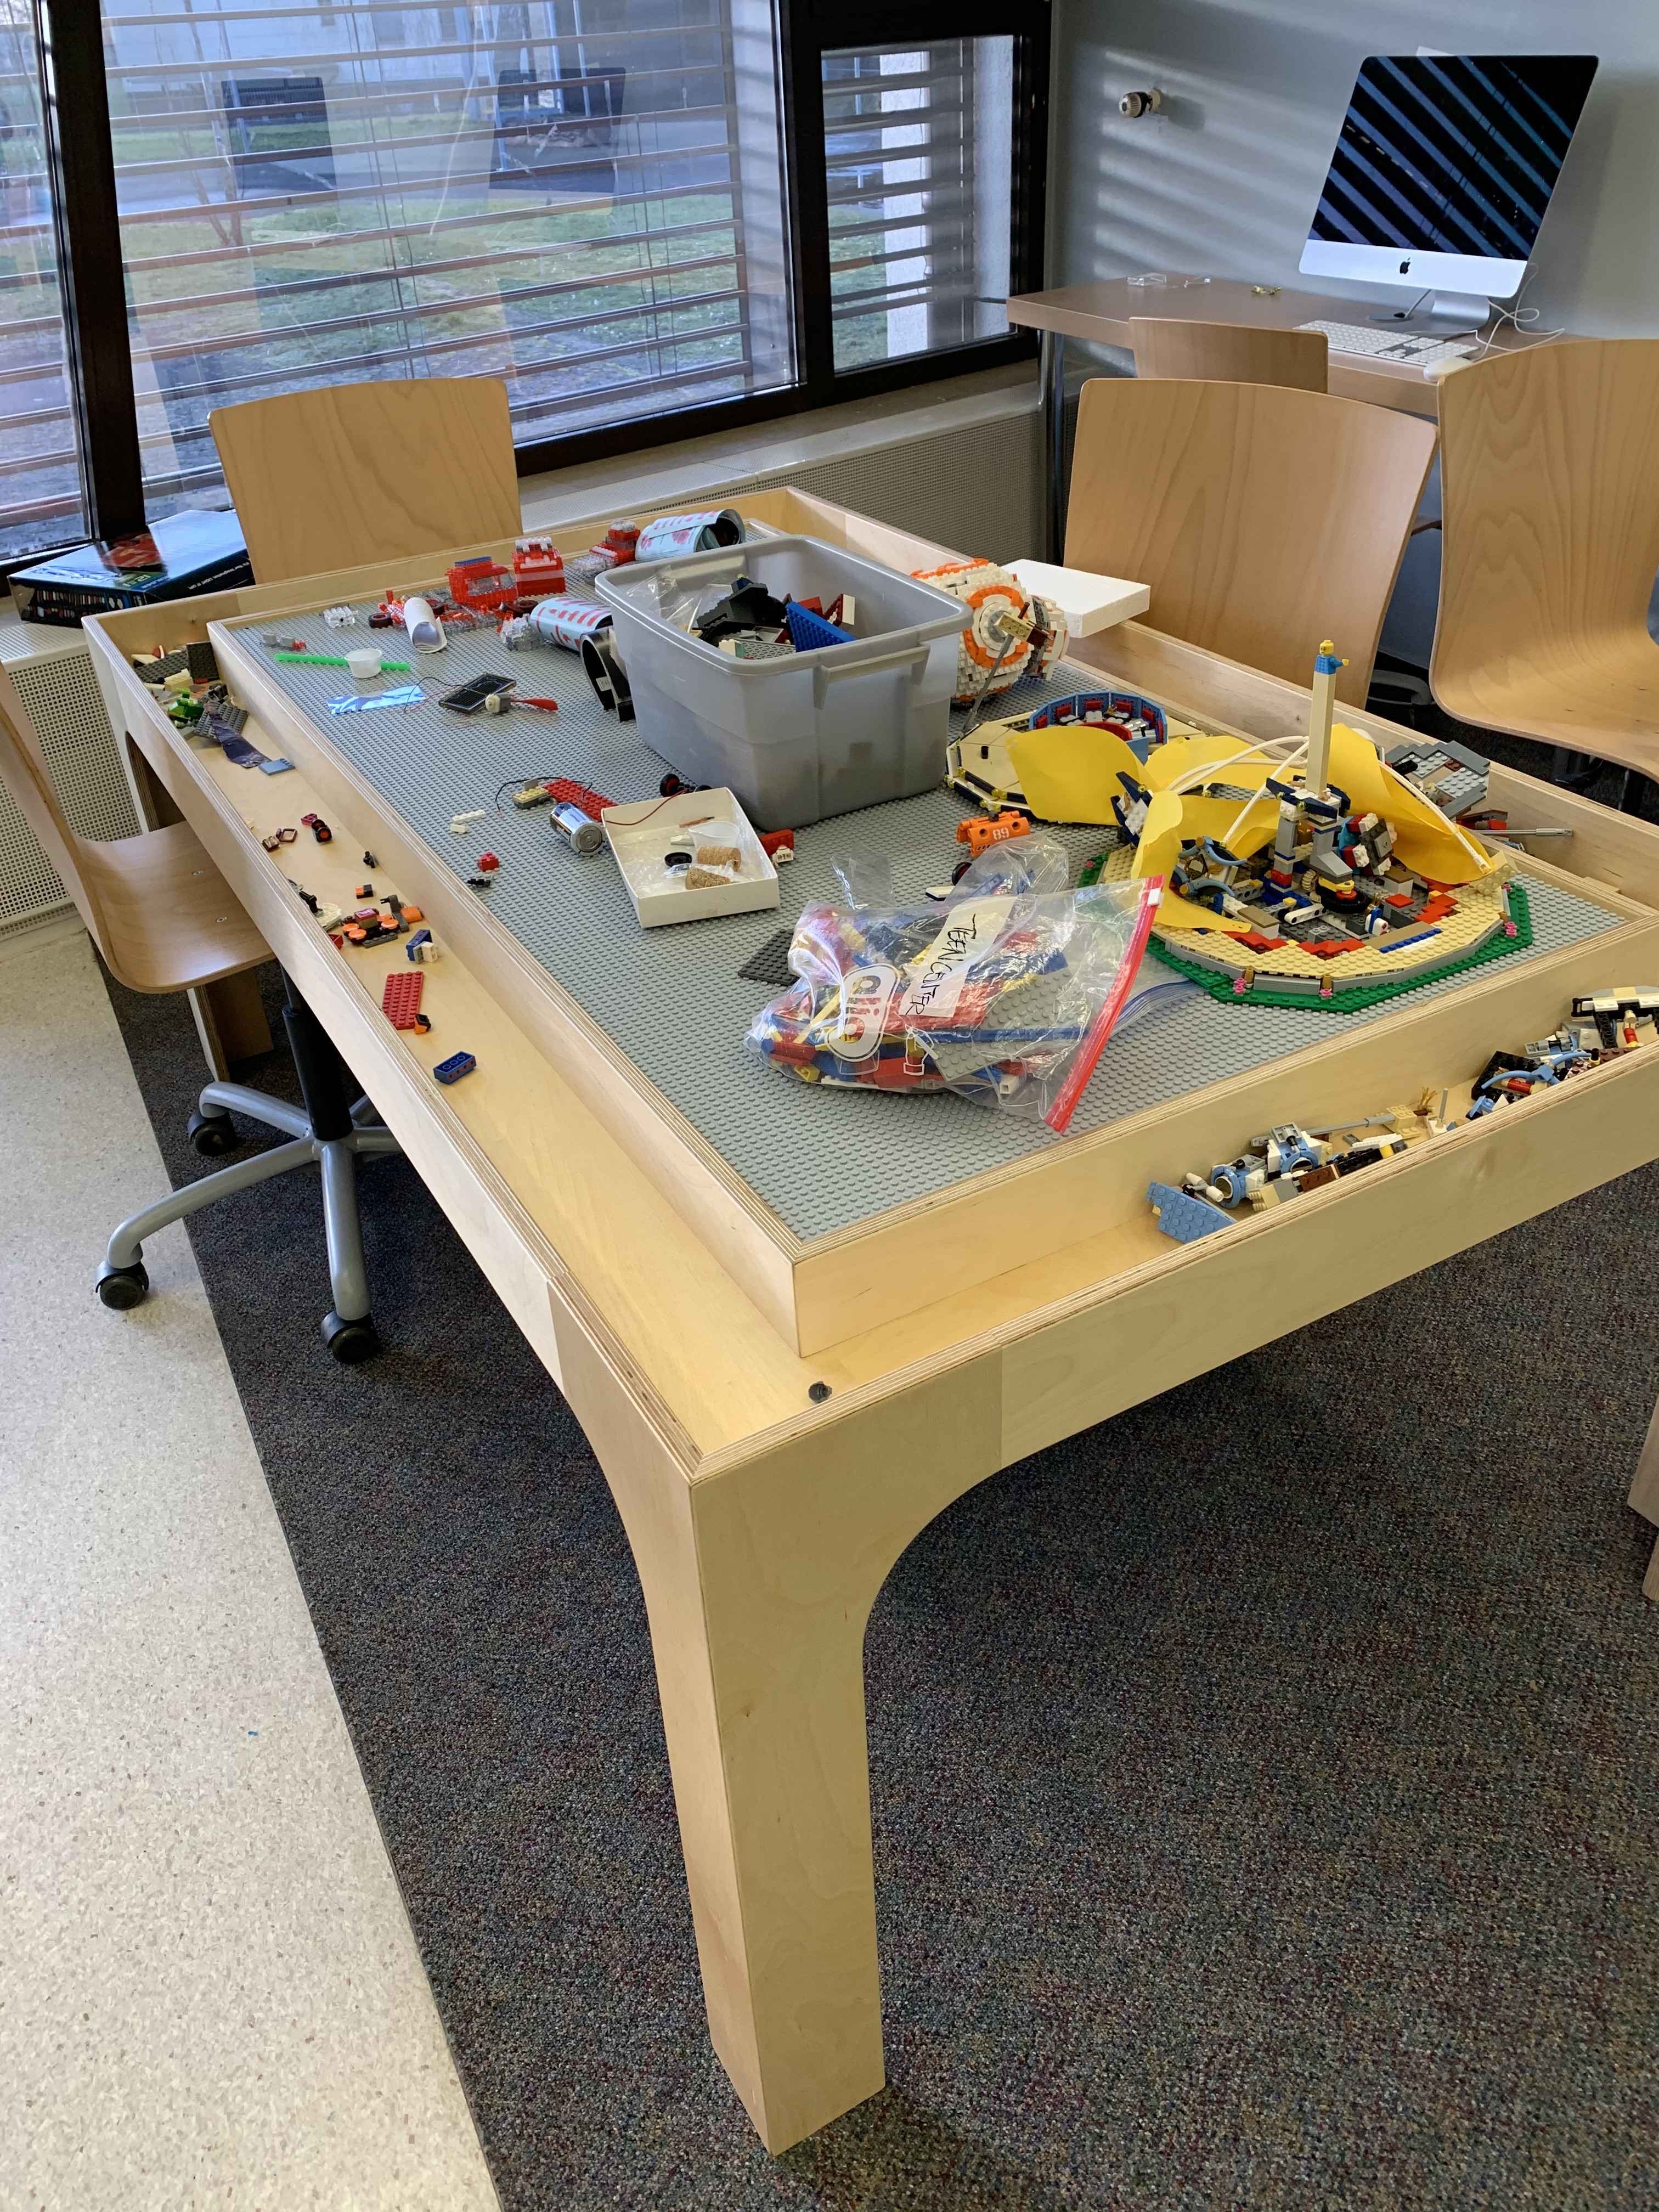 Lego Table